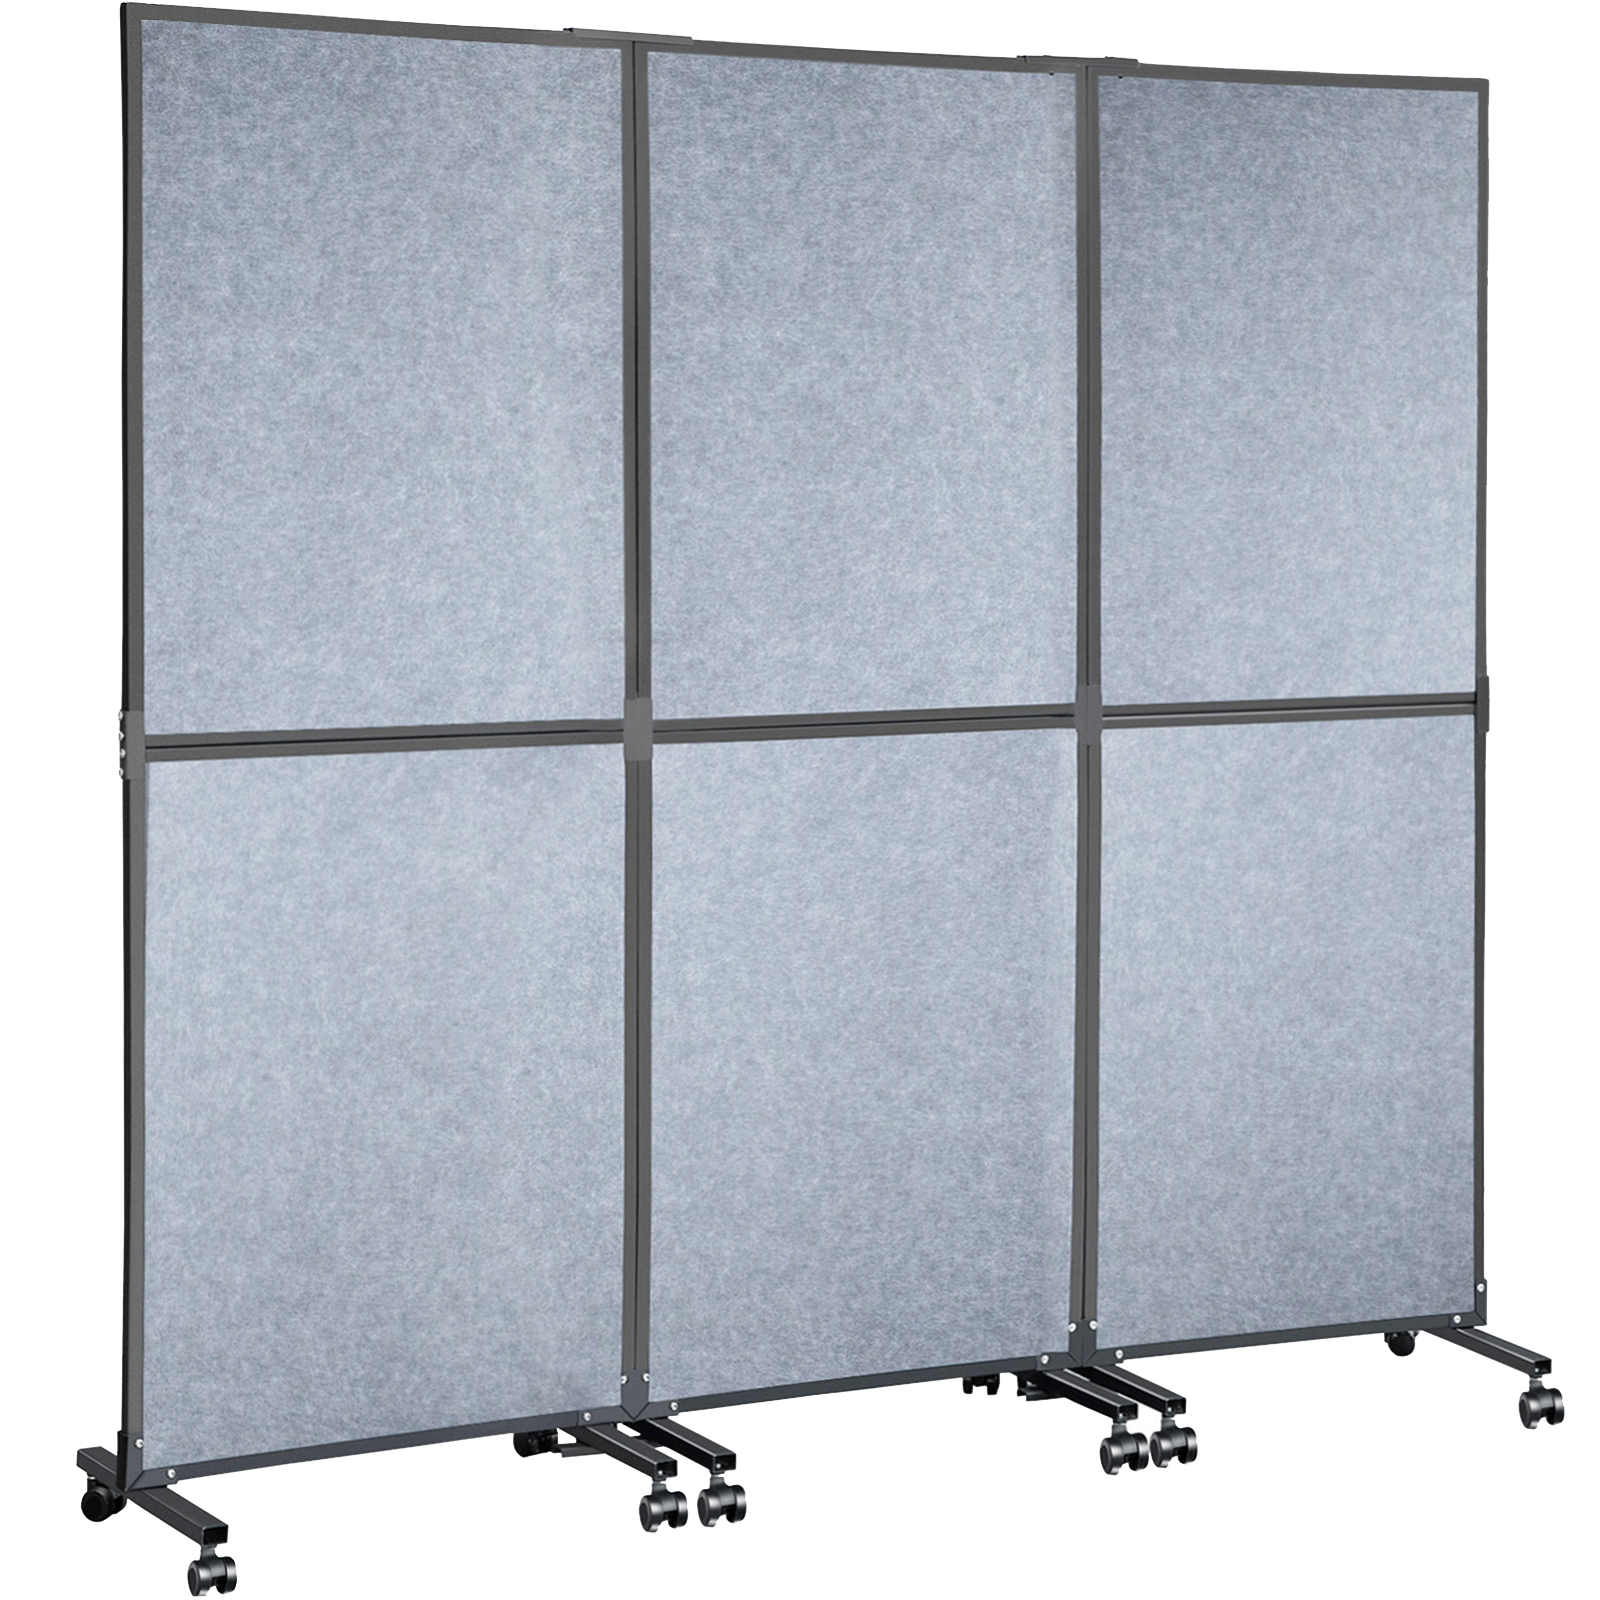 Vevor Acoustic Room Divider Office Partition Panel 72"x66" 3 Pack In Light Gray от Vevor Many GEOs